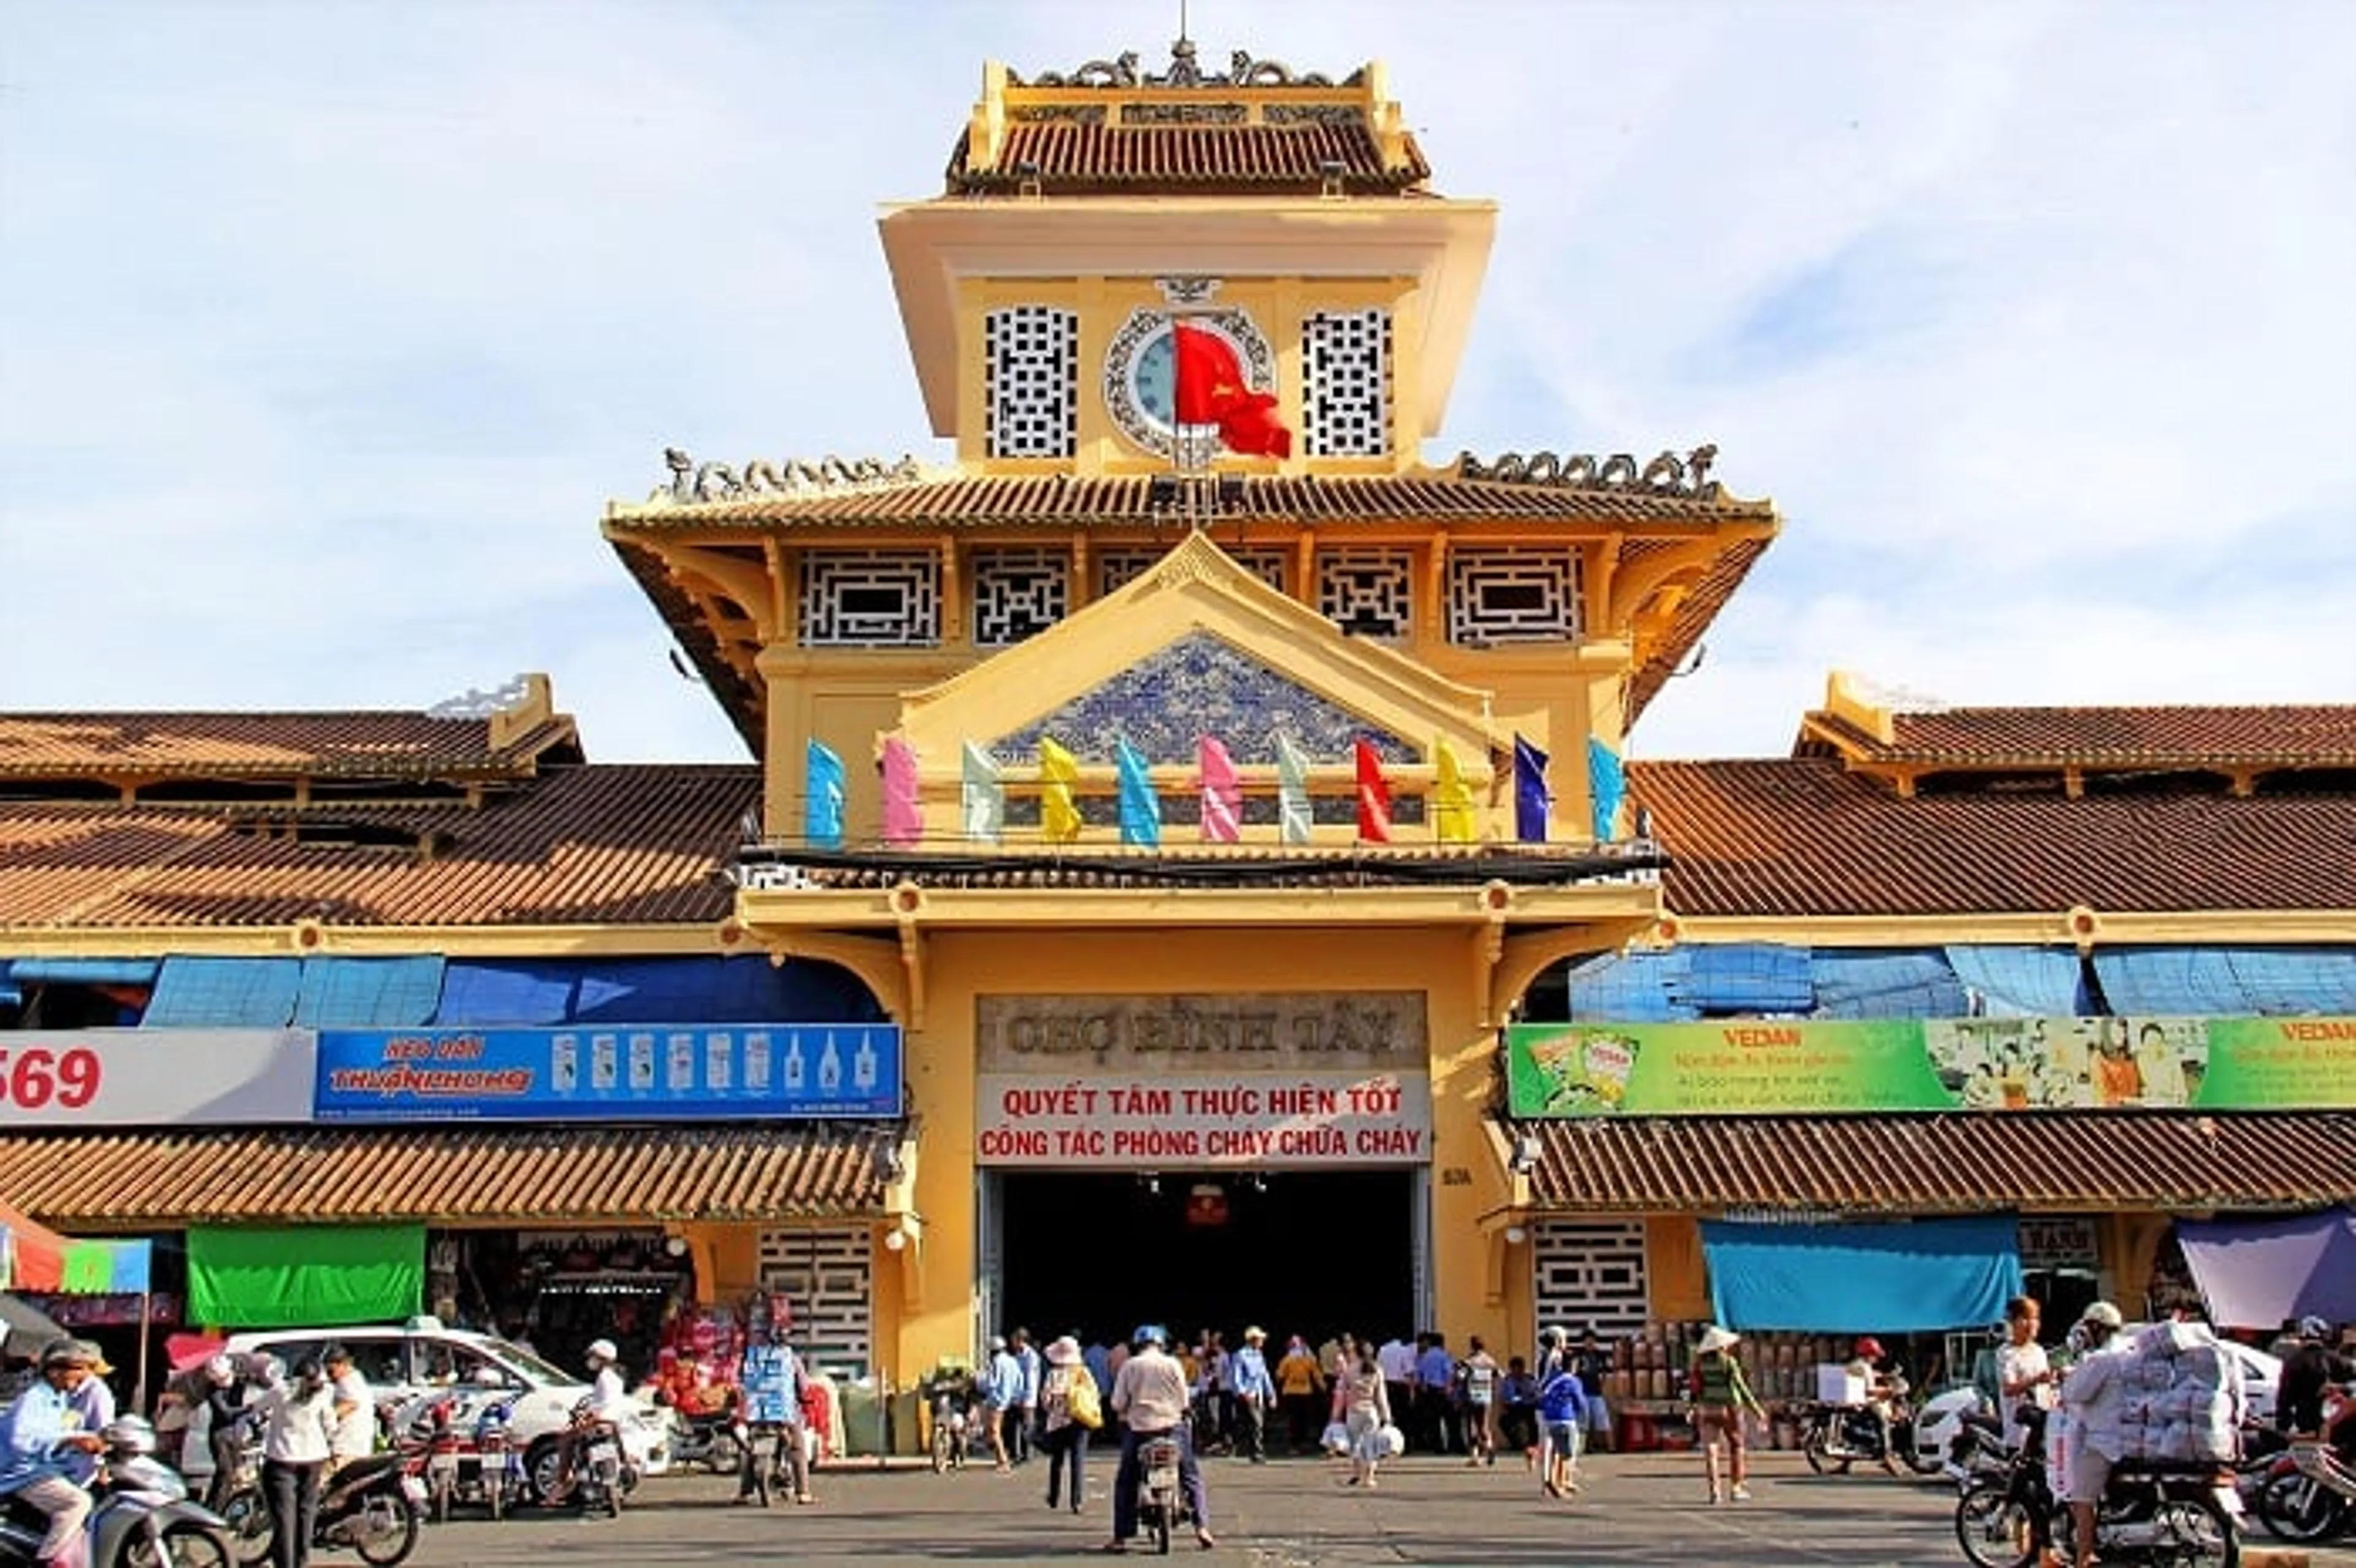 Binh Tay Market: A Must-Visit Destination in Saigon